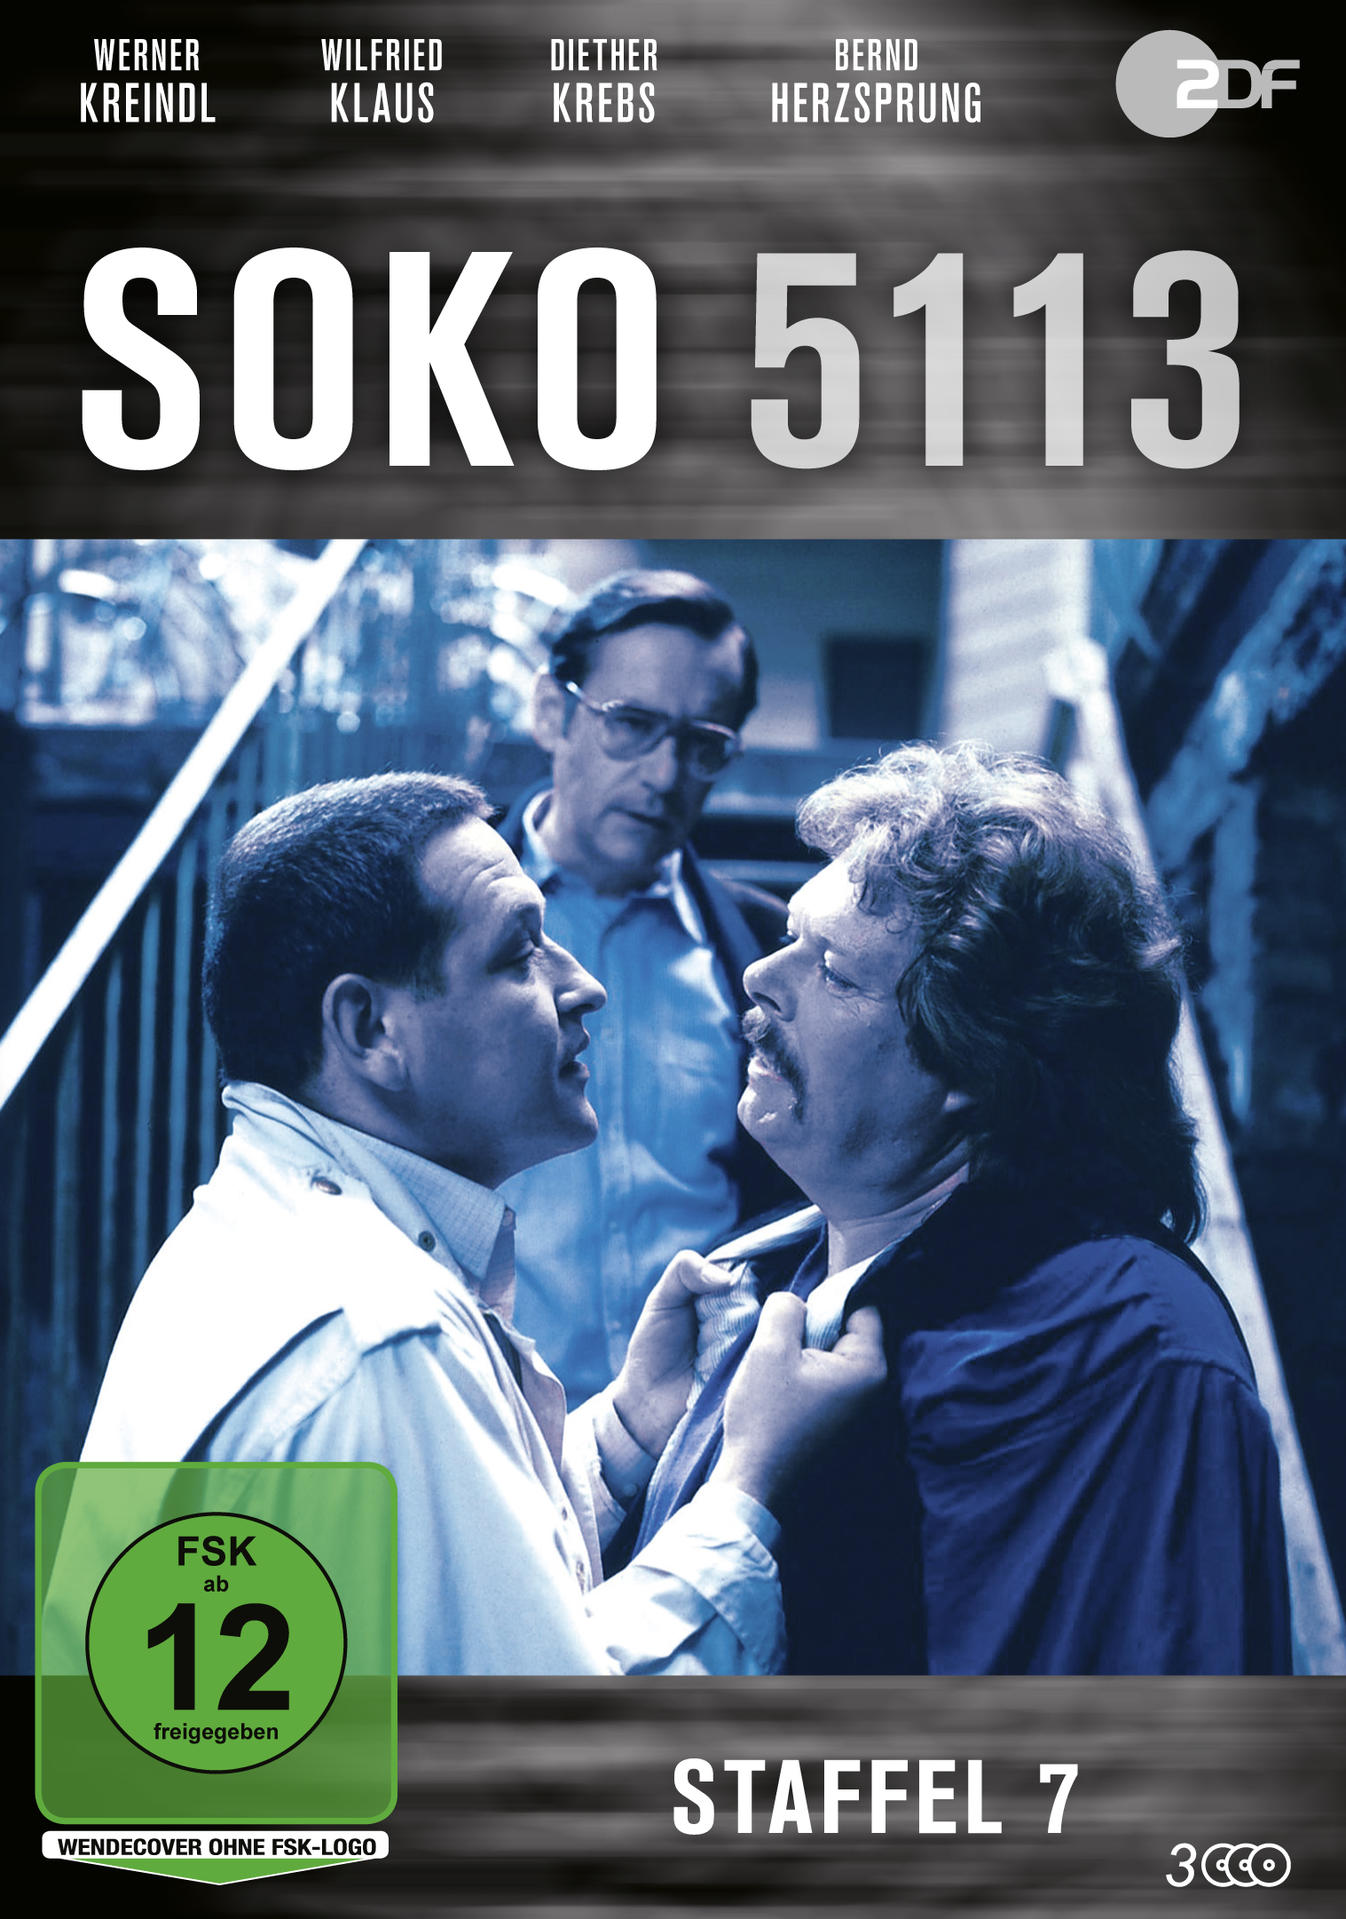 DVD 5113 Staffel 7 - Soko